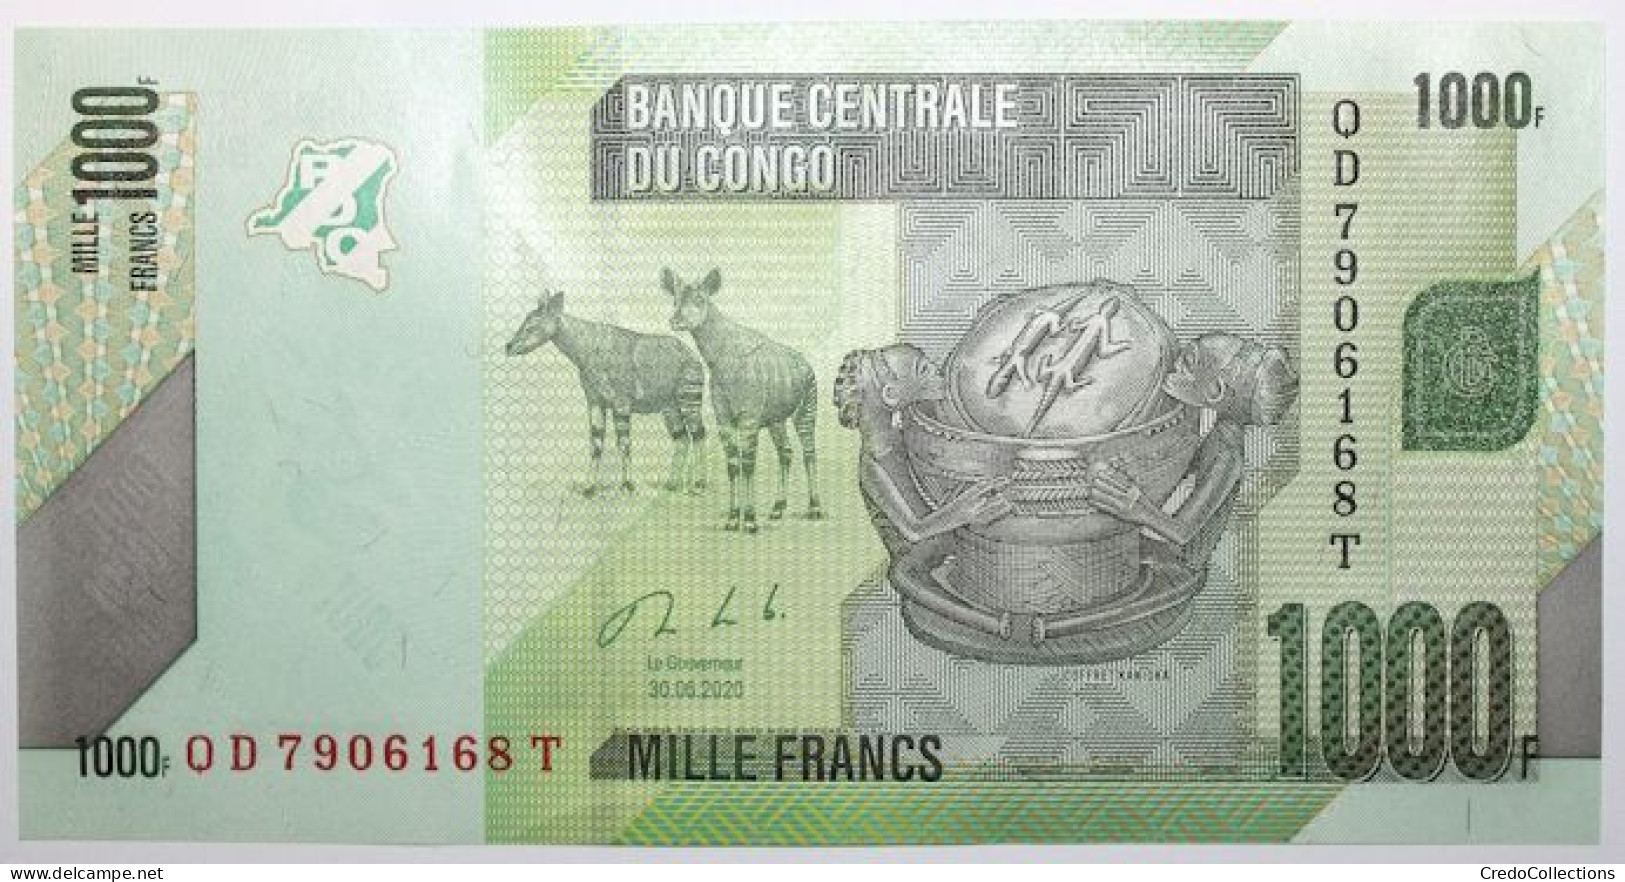 Congo (RD) - 1000 Francs - 2020 - PICK 101c - NEUF - Repubblica Democratica Del Congo & Zaire